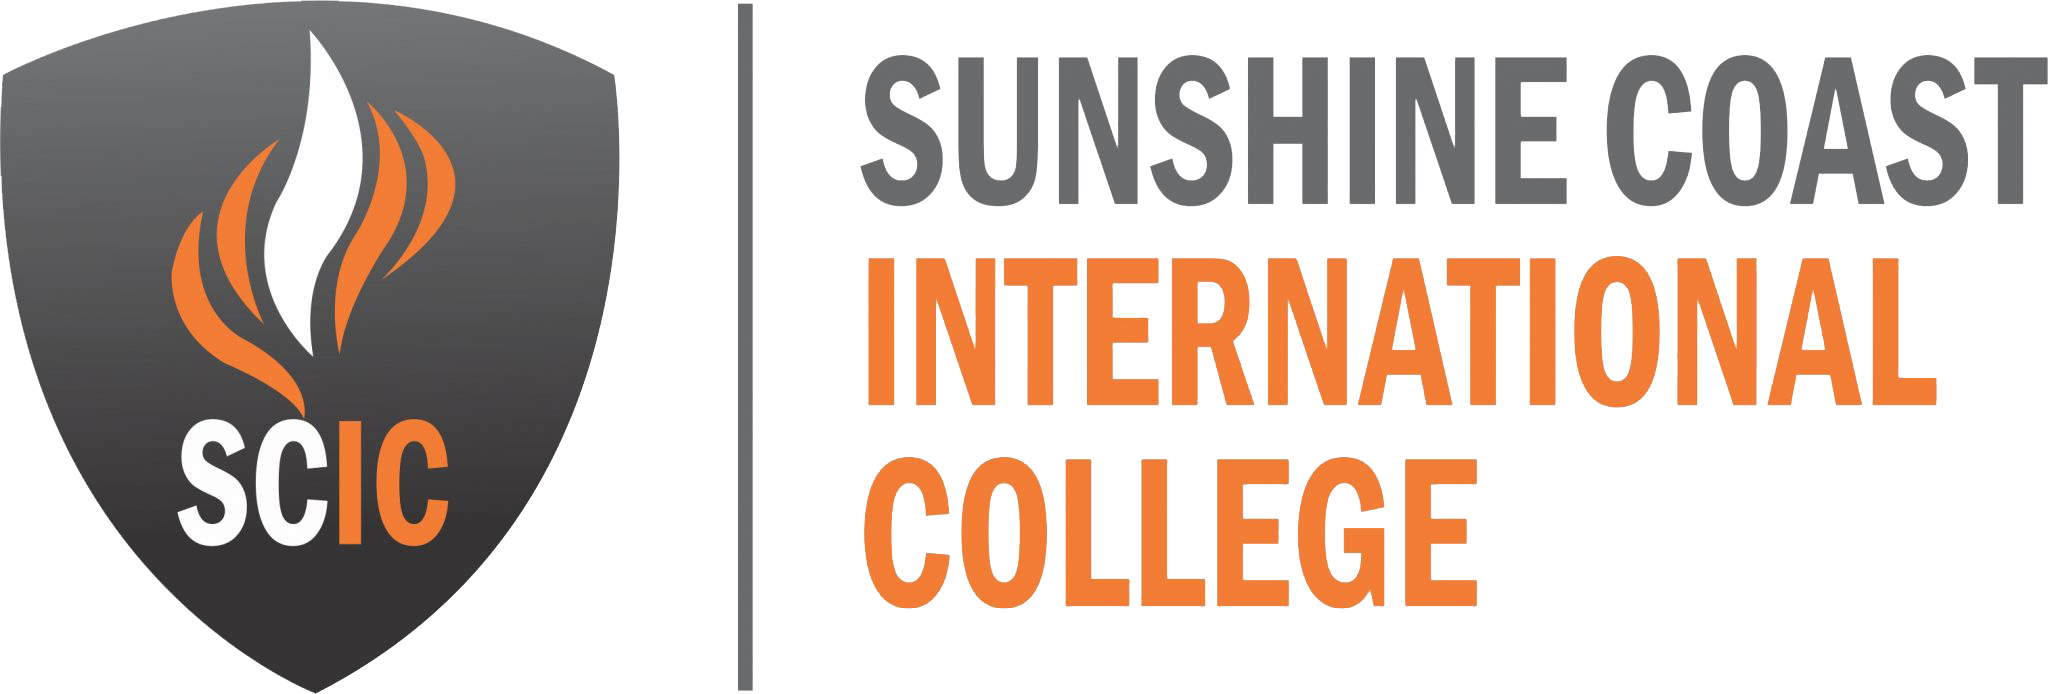 Sunshine Coast International College